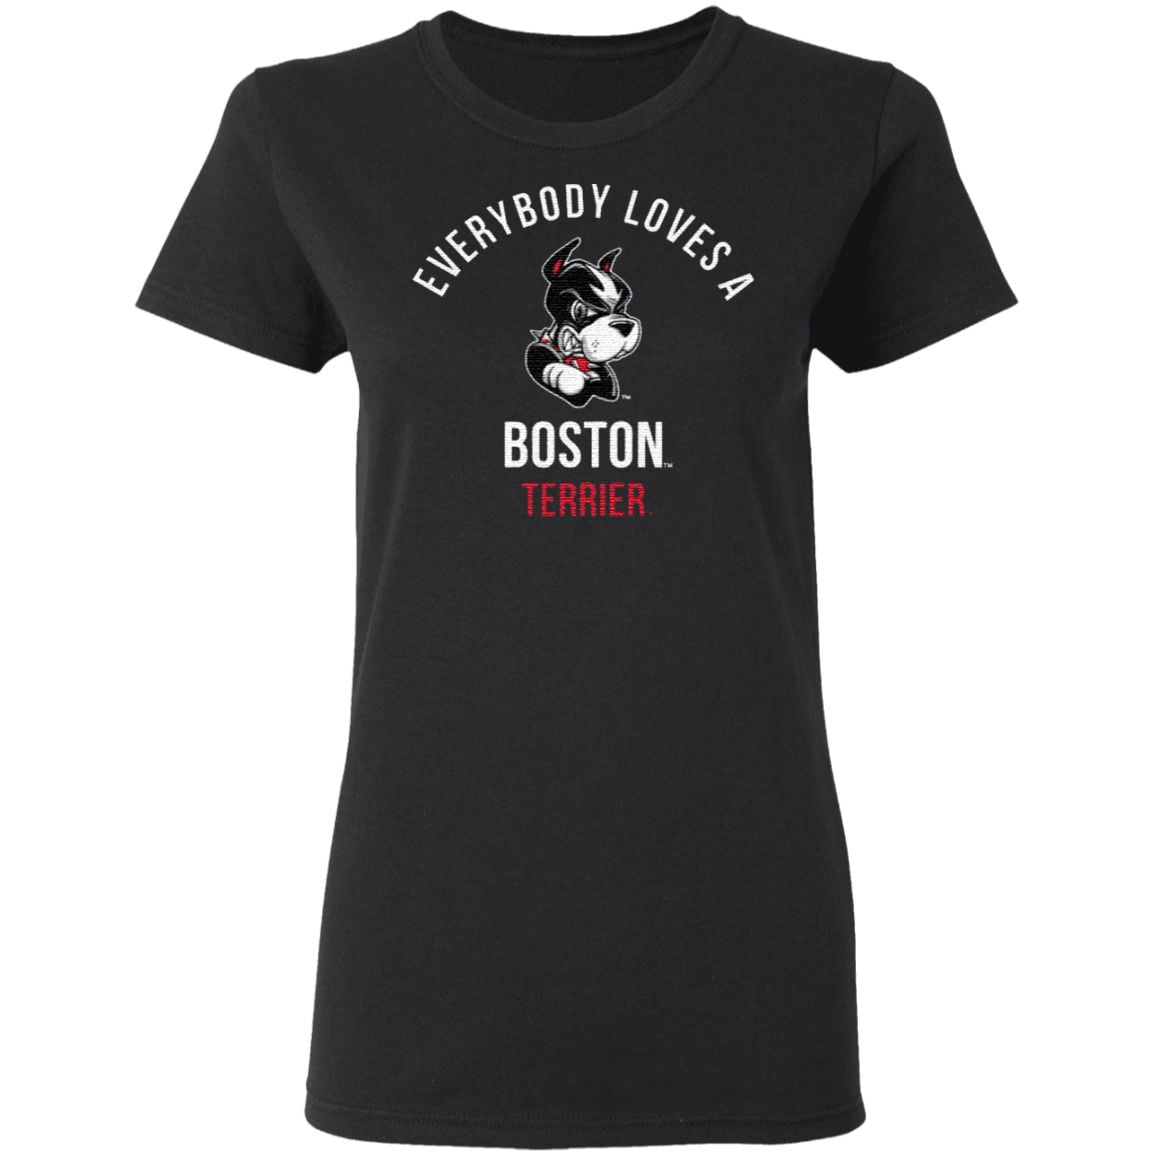 Boston University Terriers TShirt